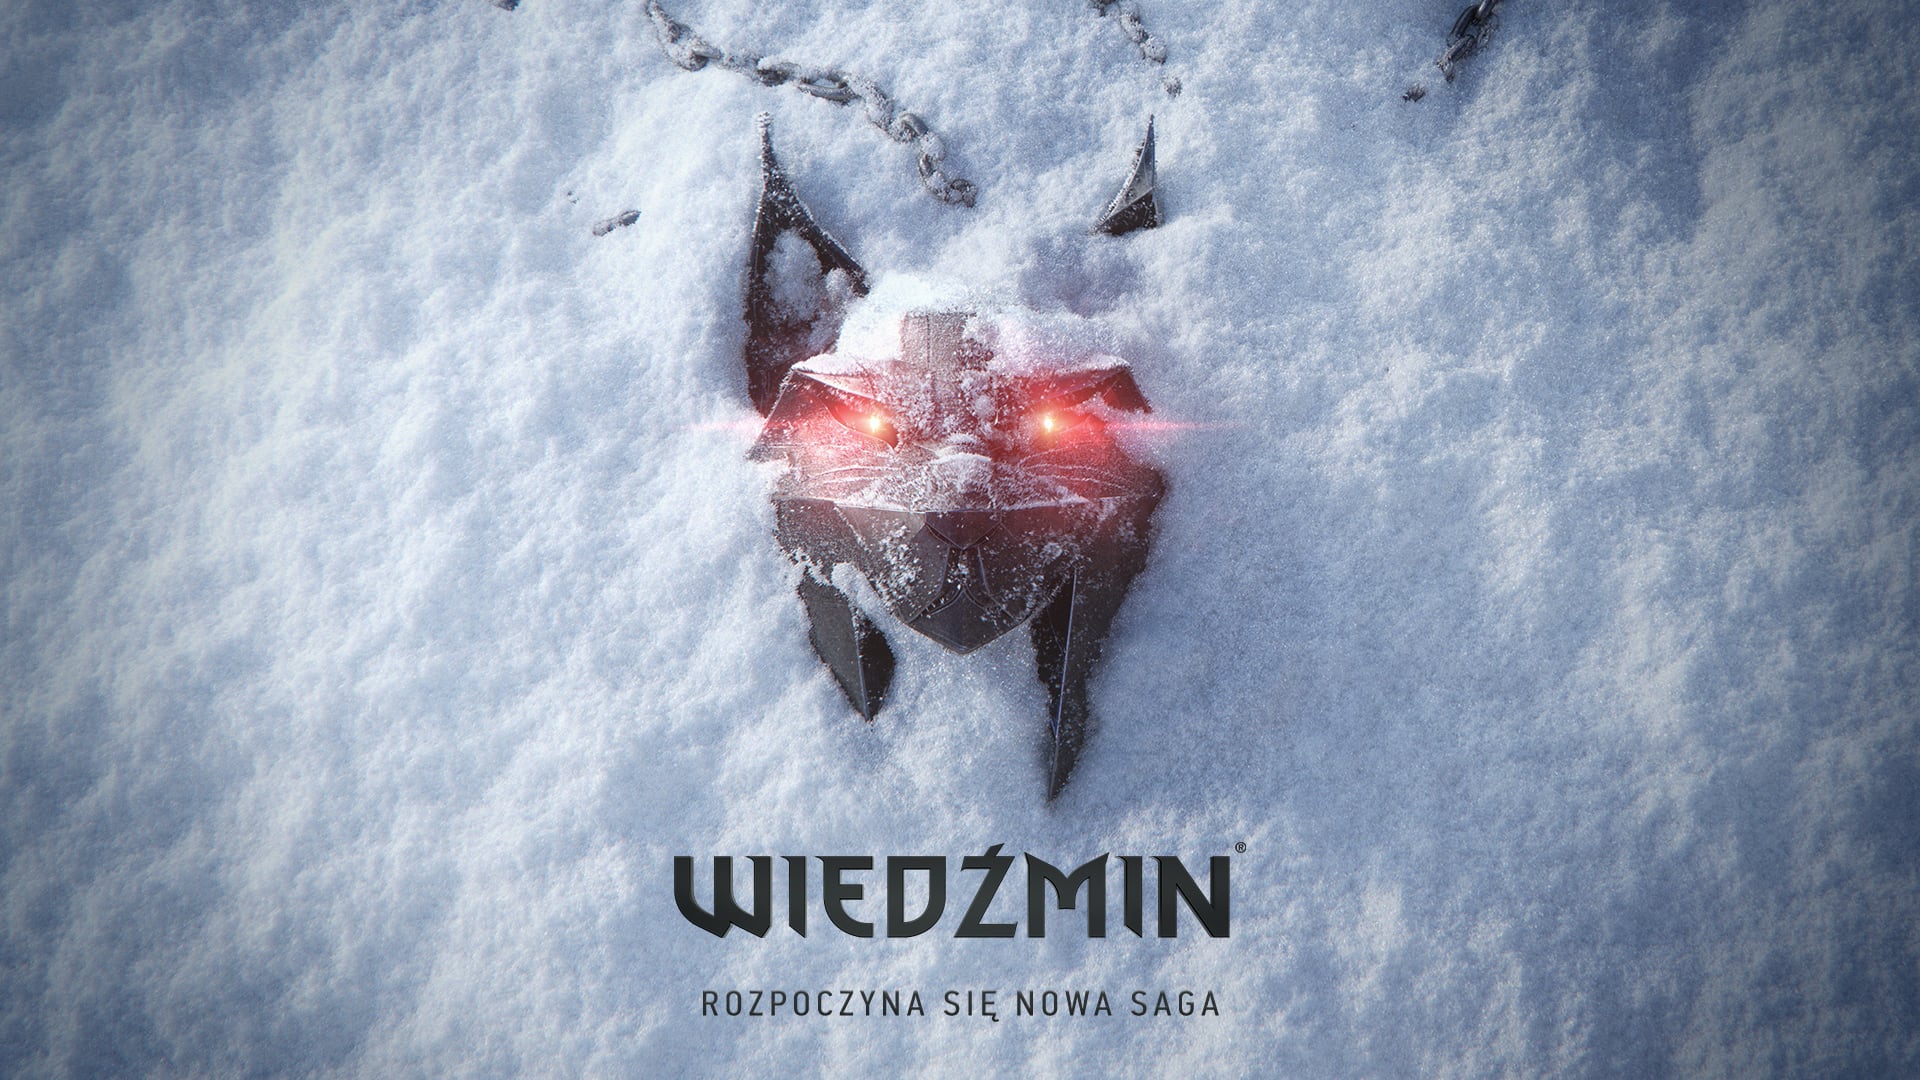 Wiedźmin, CD Projekt